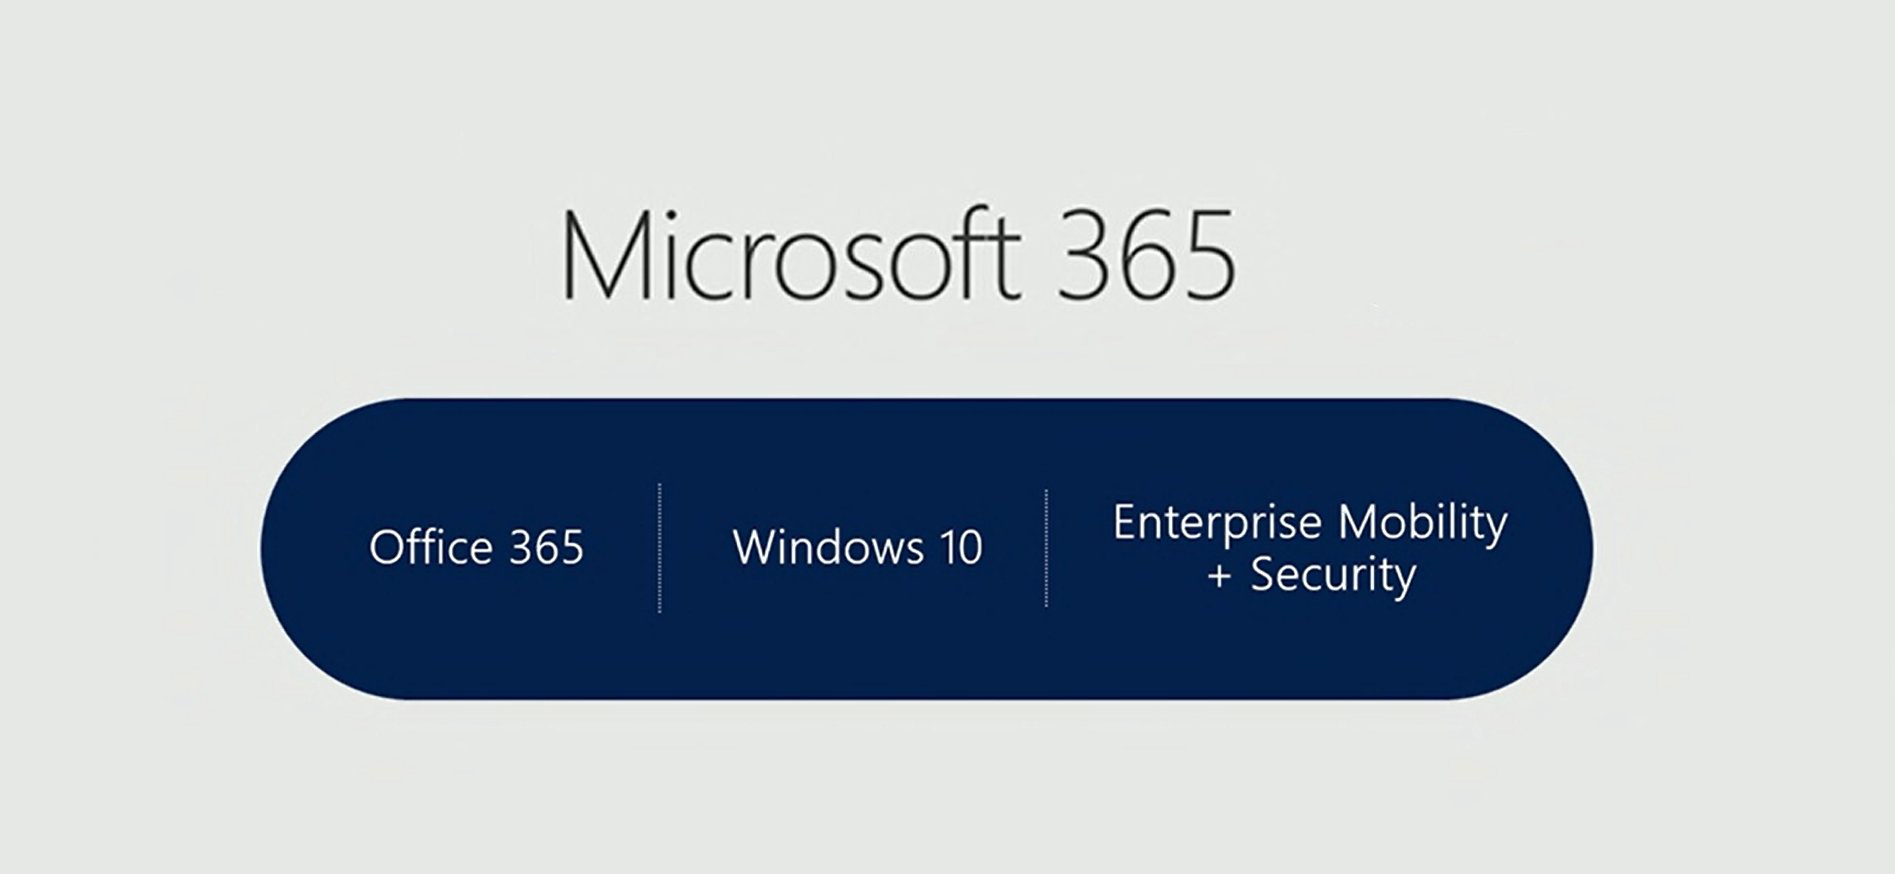 Apresentamos o Microsoft 365